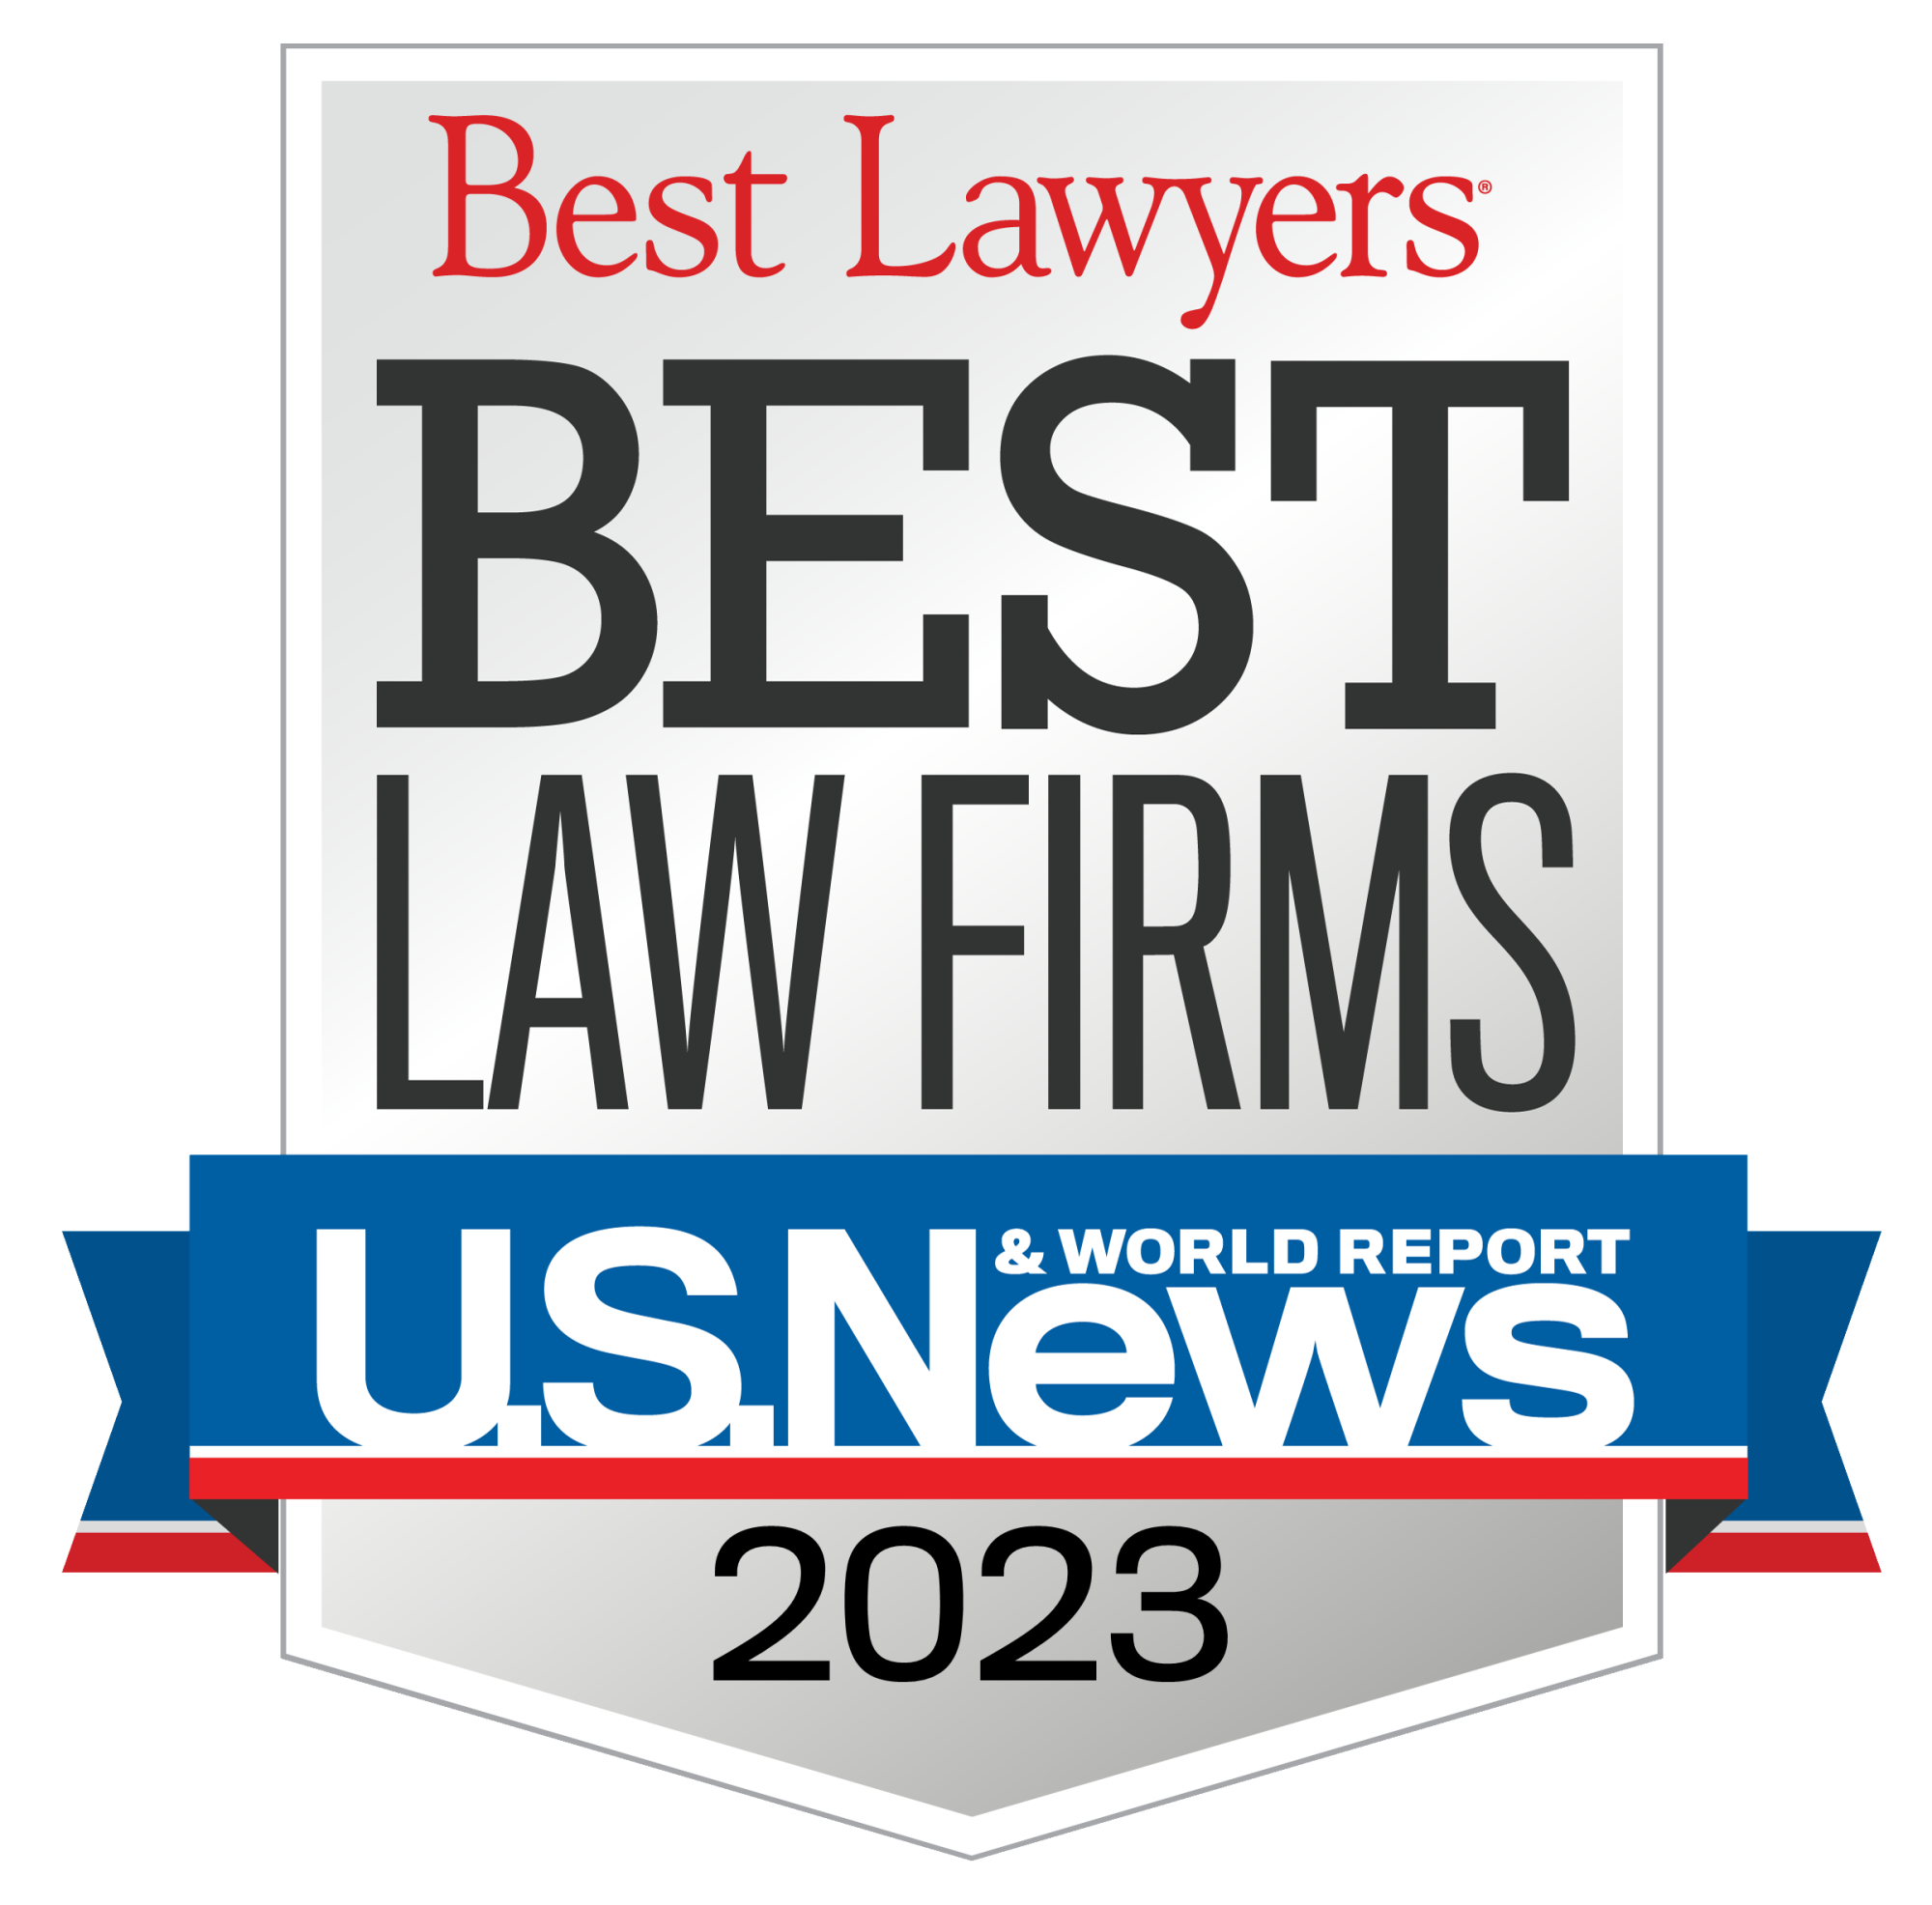 U.S. News - Best Lawyers "Best Law Firms" 2023